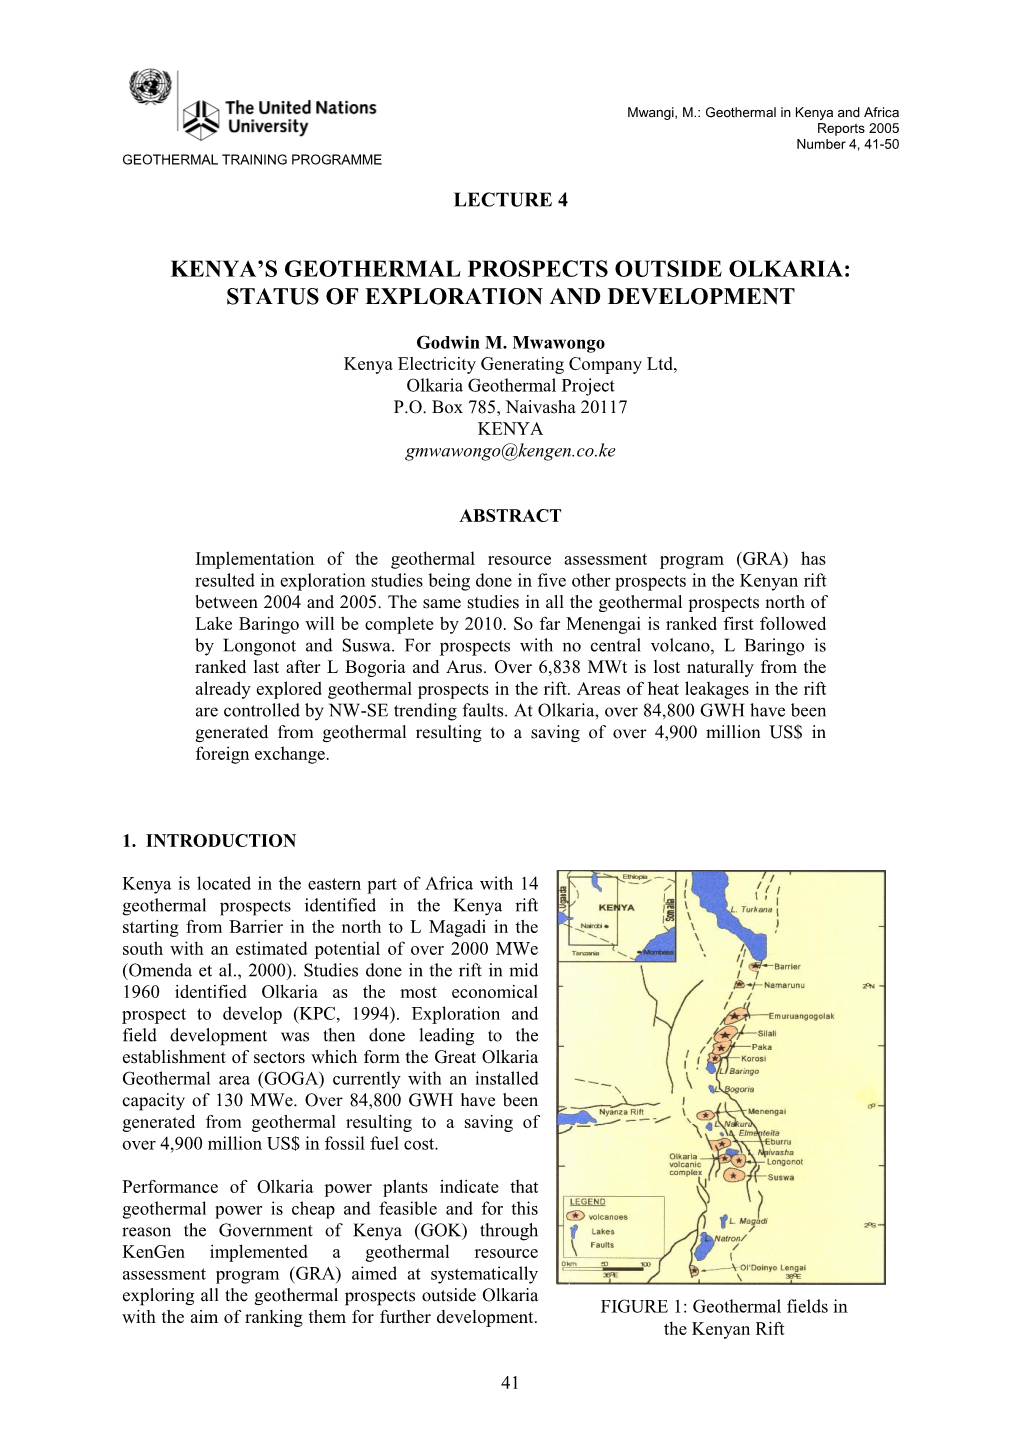 Kenyas Geothermal Prospects Outside Olkaria